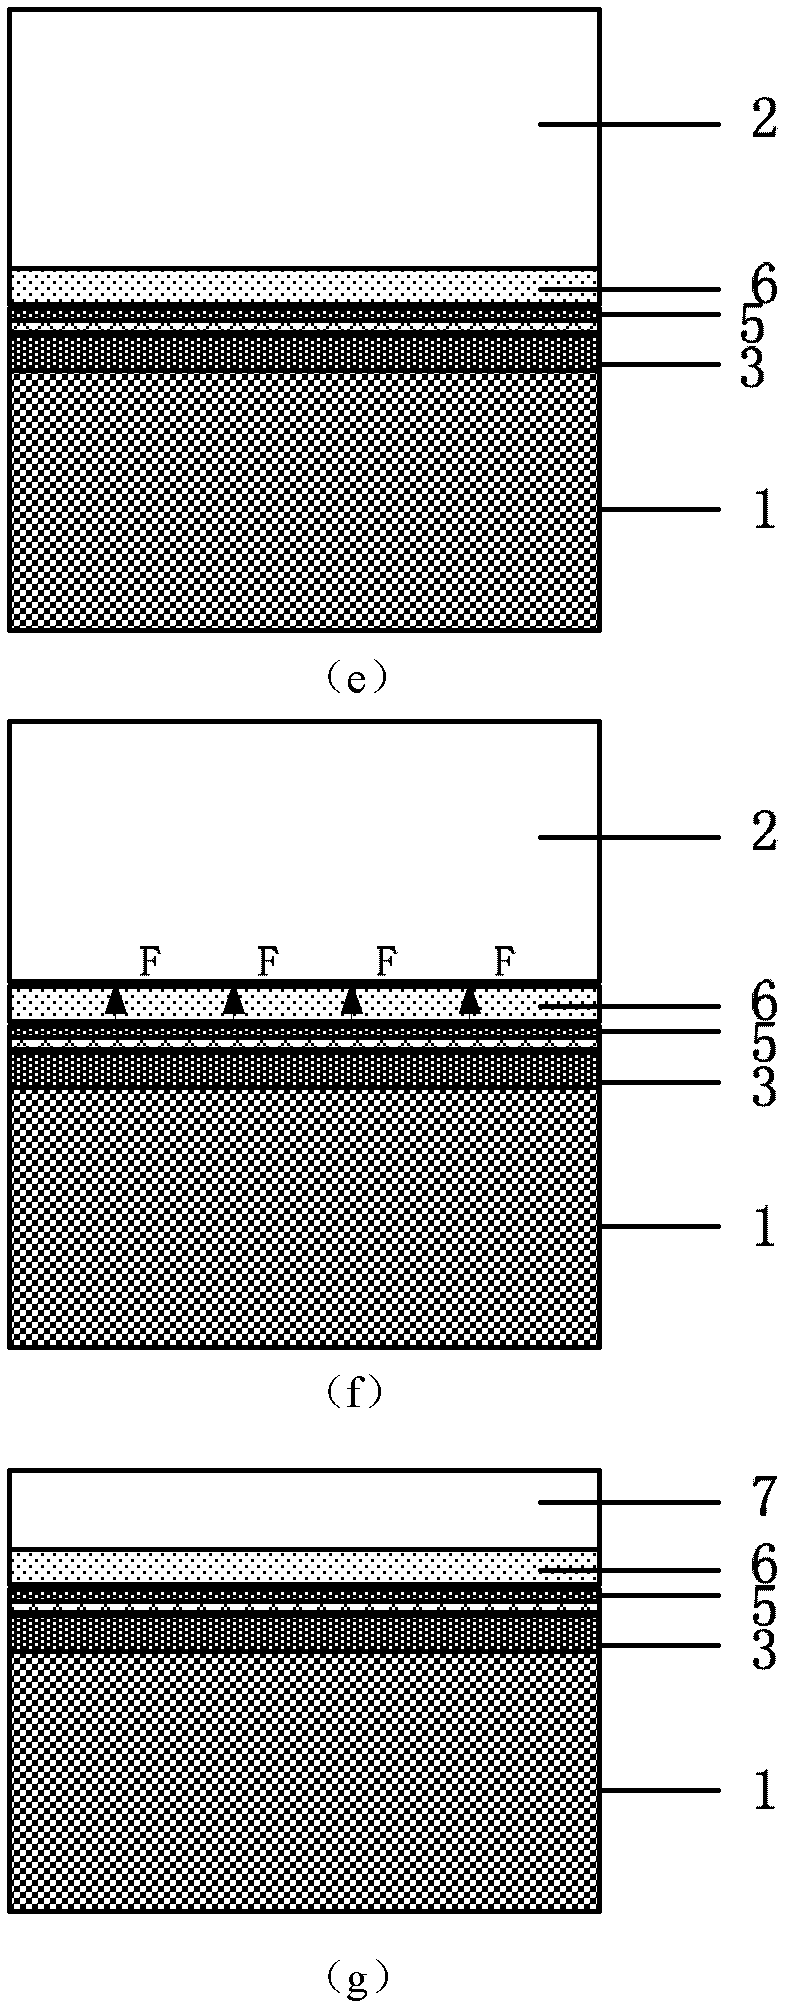 Method for preparing germanium-on-insulator (GeOI) substrate